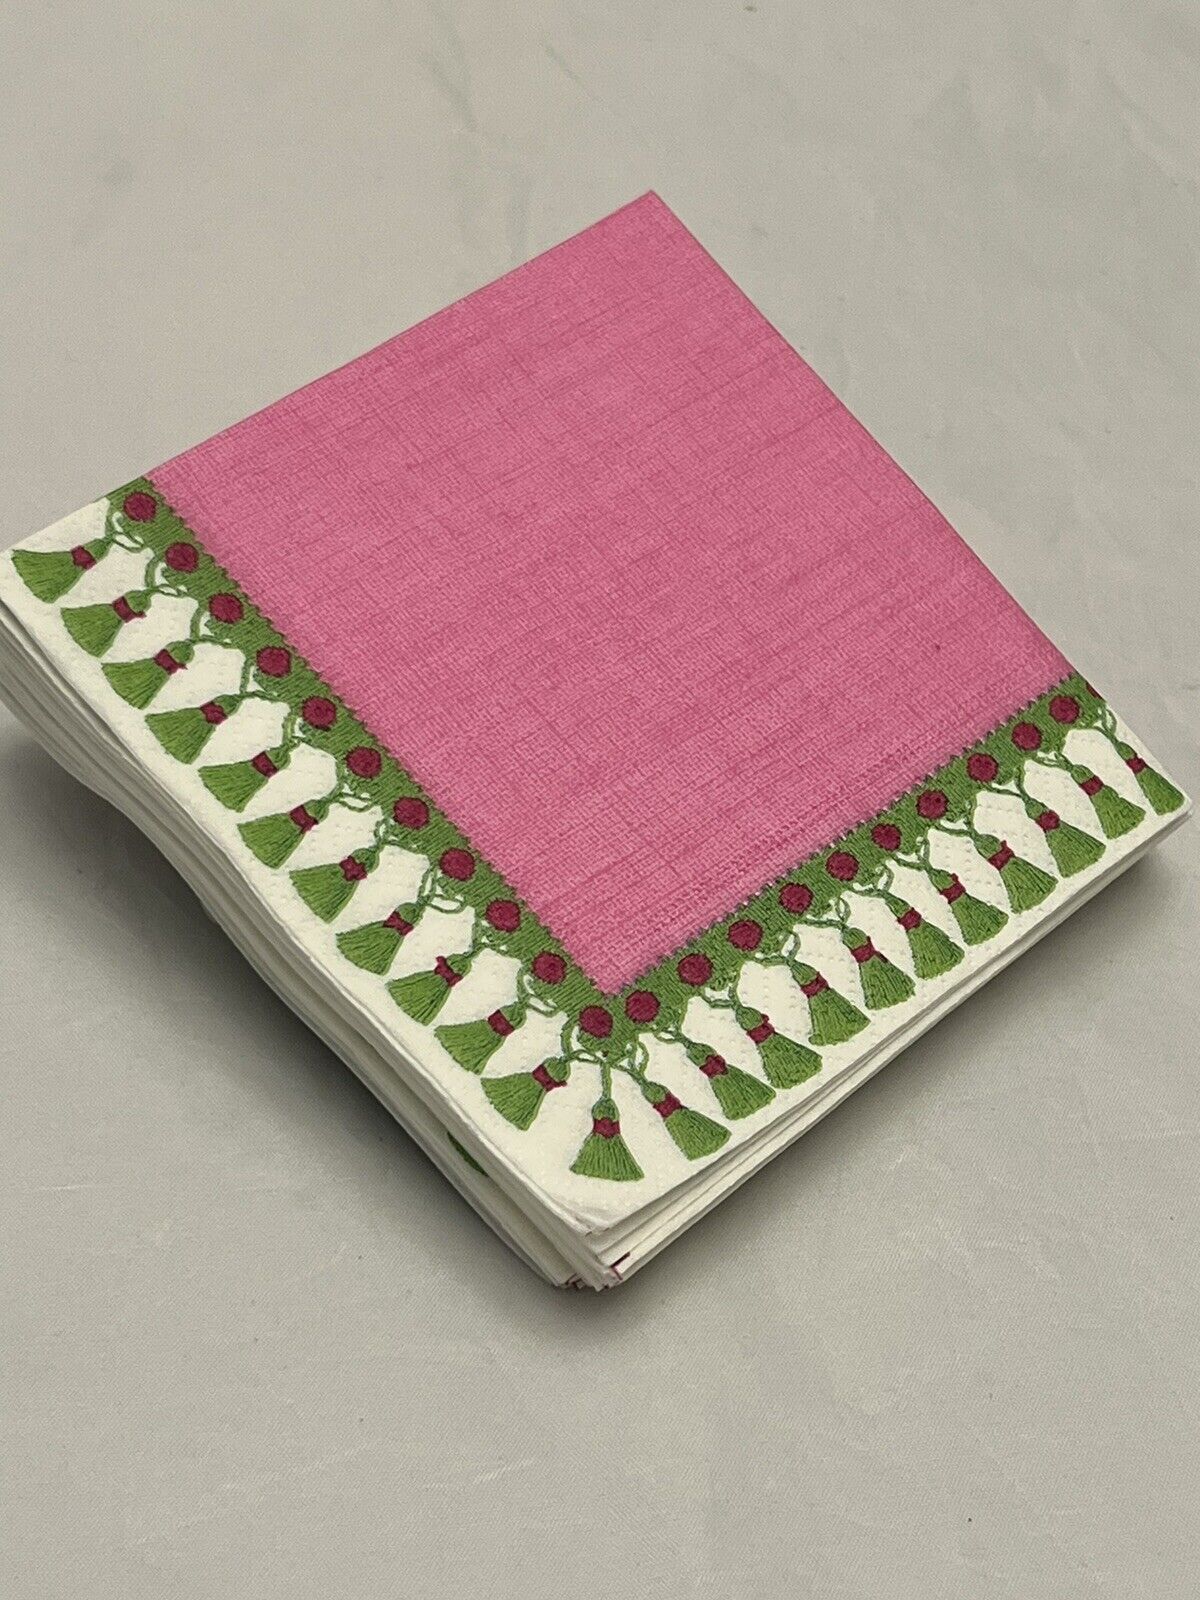 Vintage paper cocktail party napkins pink green tassel display crafts